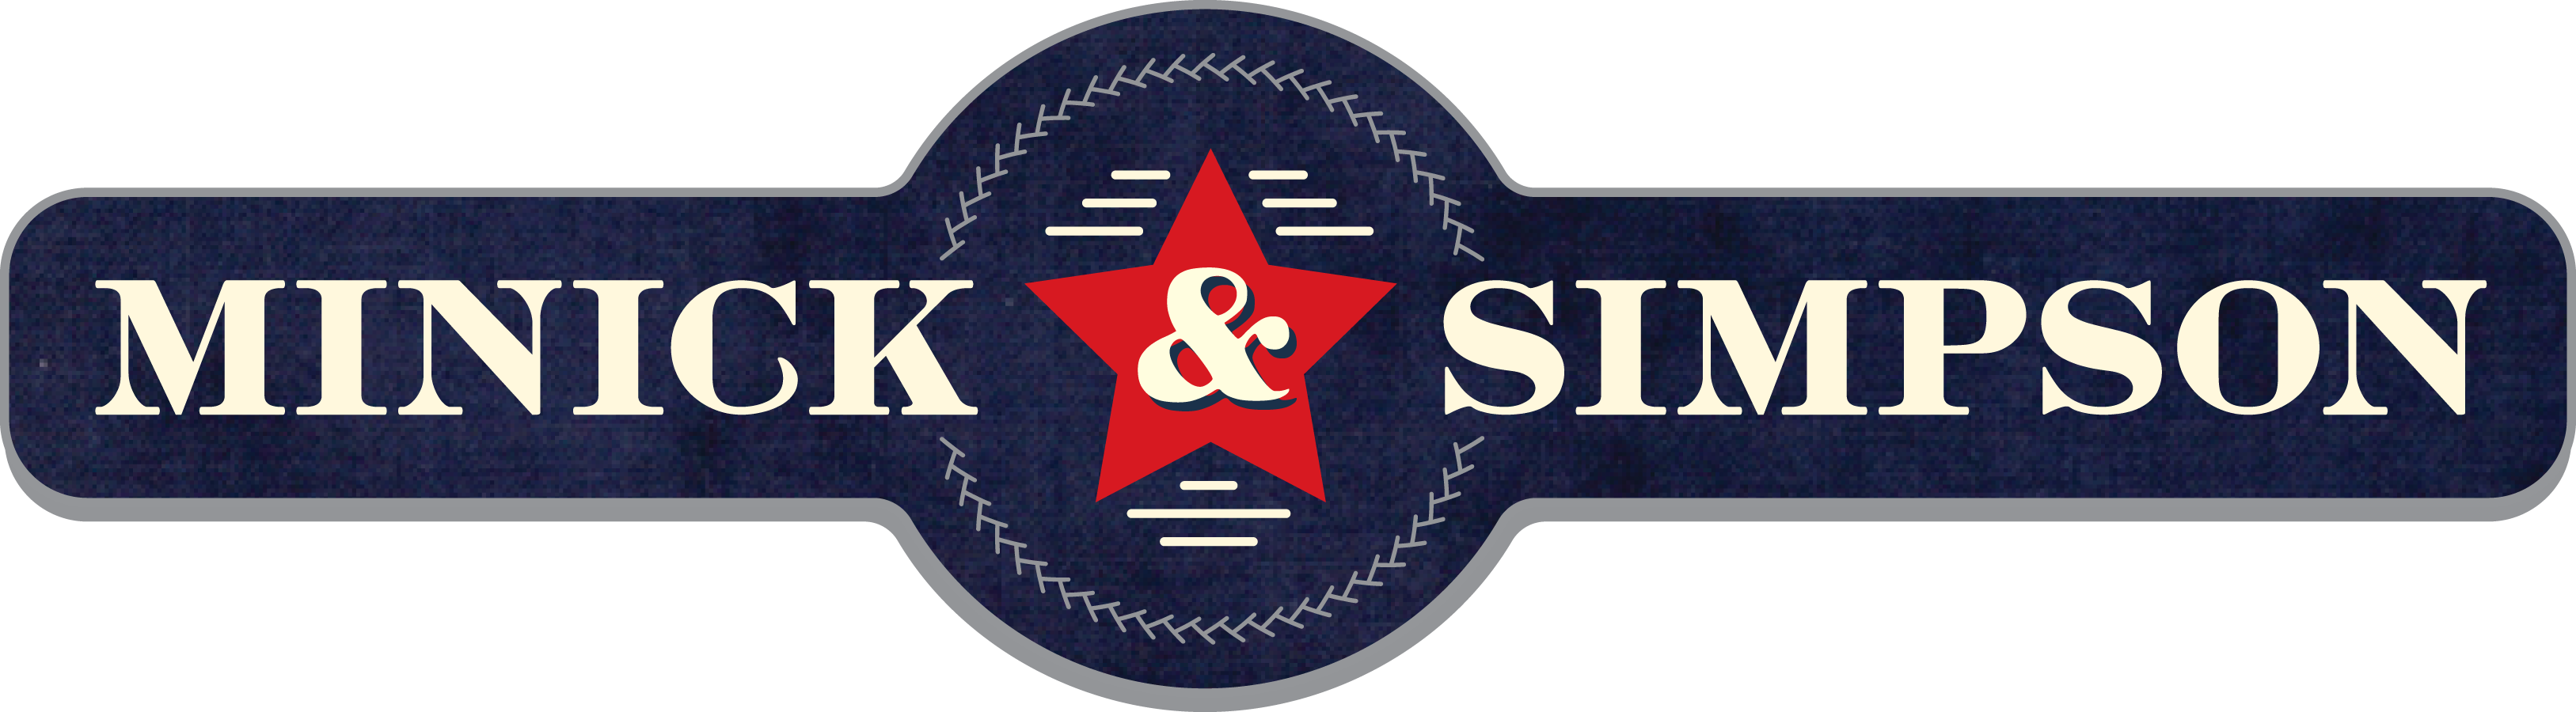 Minick And Simpson logo